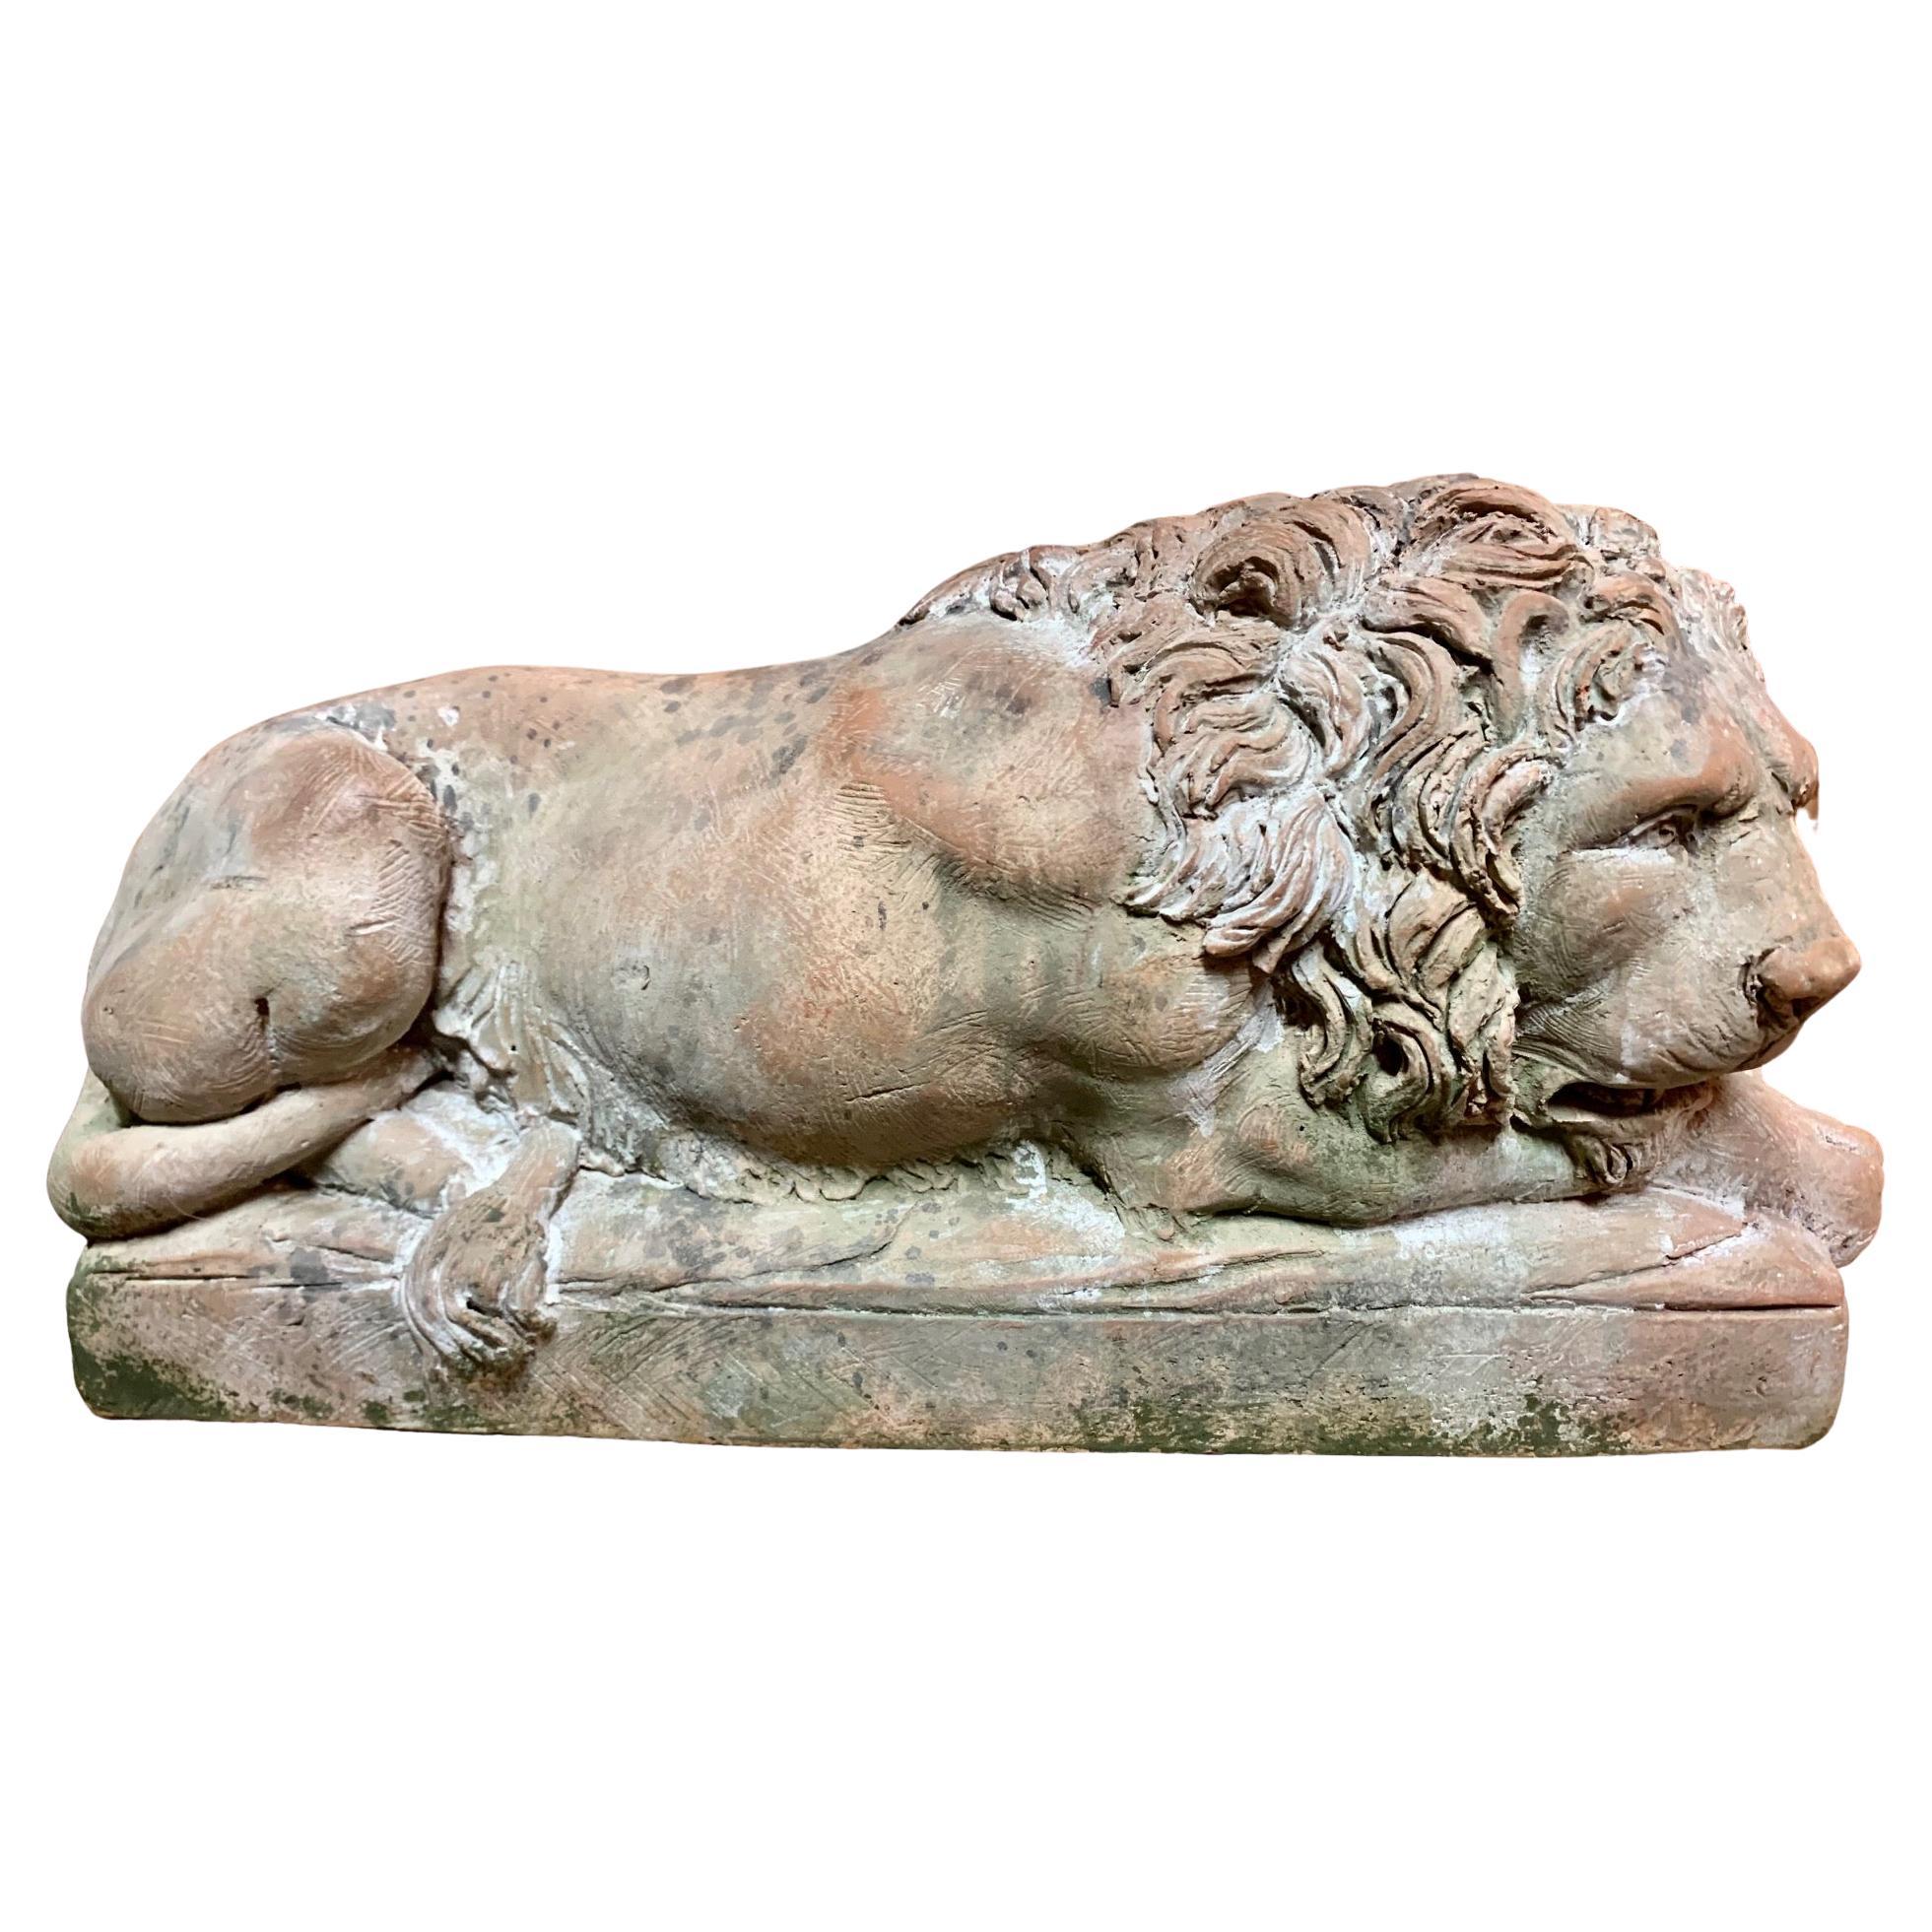 Lyngl-Löwen-Skulptur aus Terrakotta aus dem 20. Jahrhundert